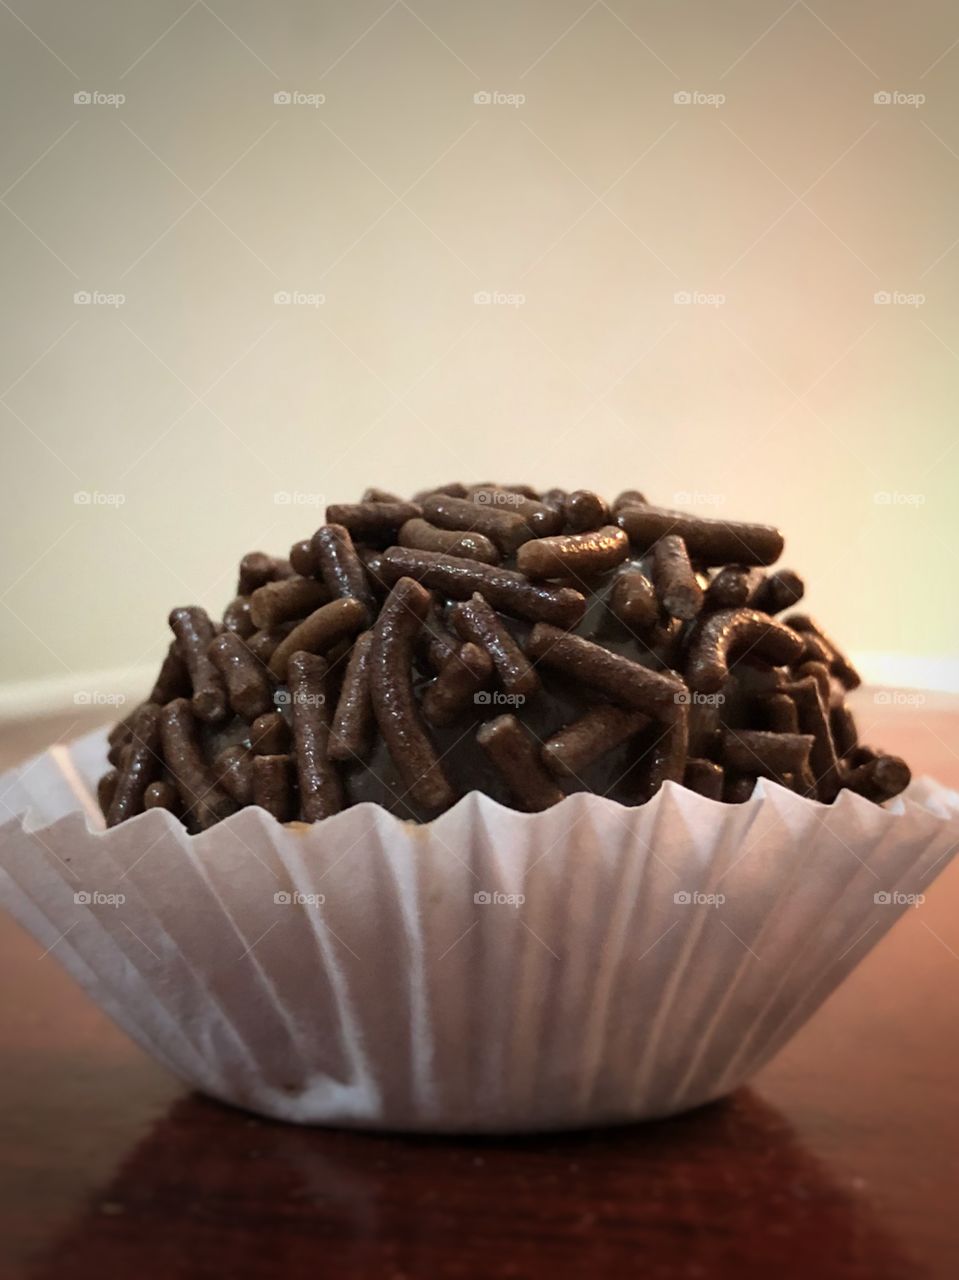 Brigadeiro - a Brazilian sweet made of chocolate and condensed milk, like Chocolate Truffle.